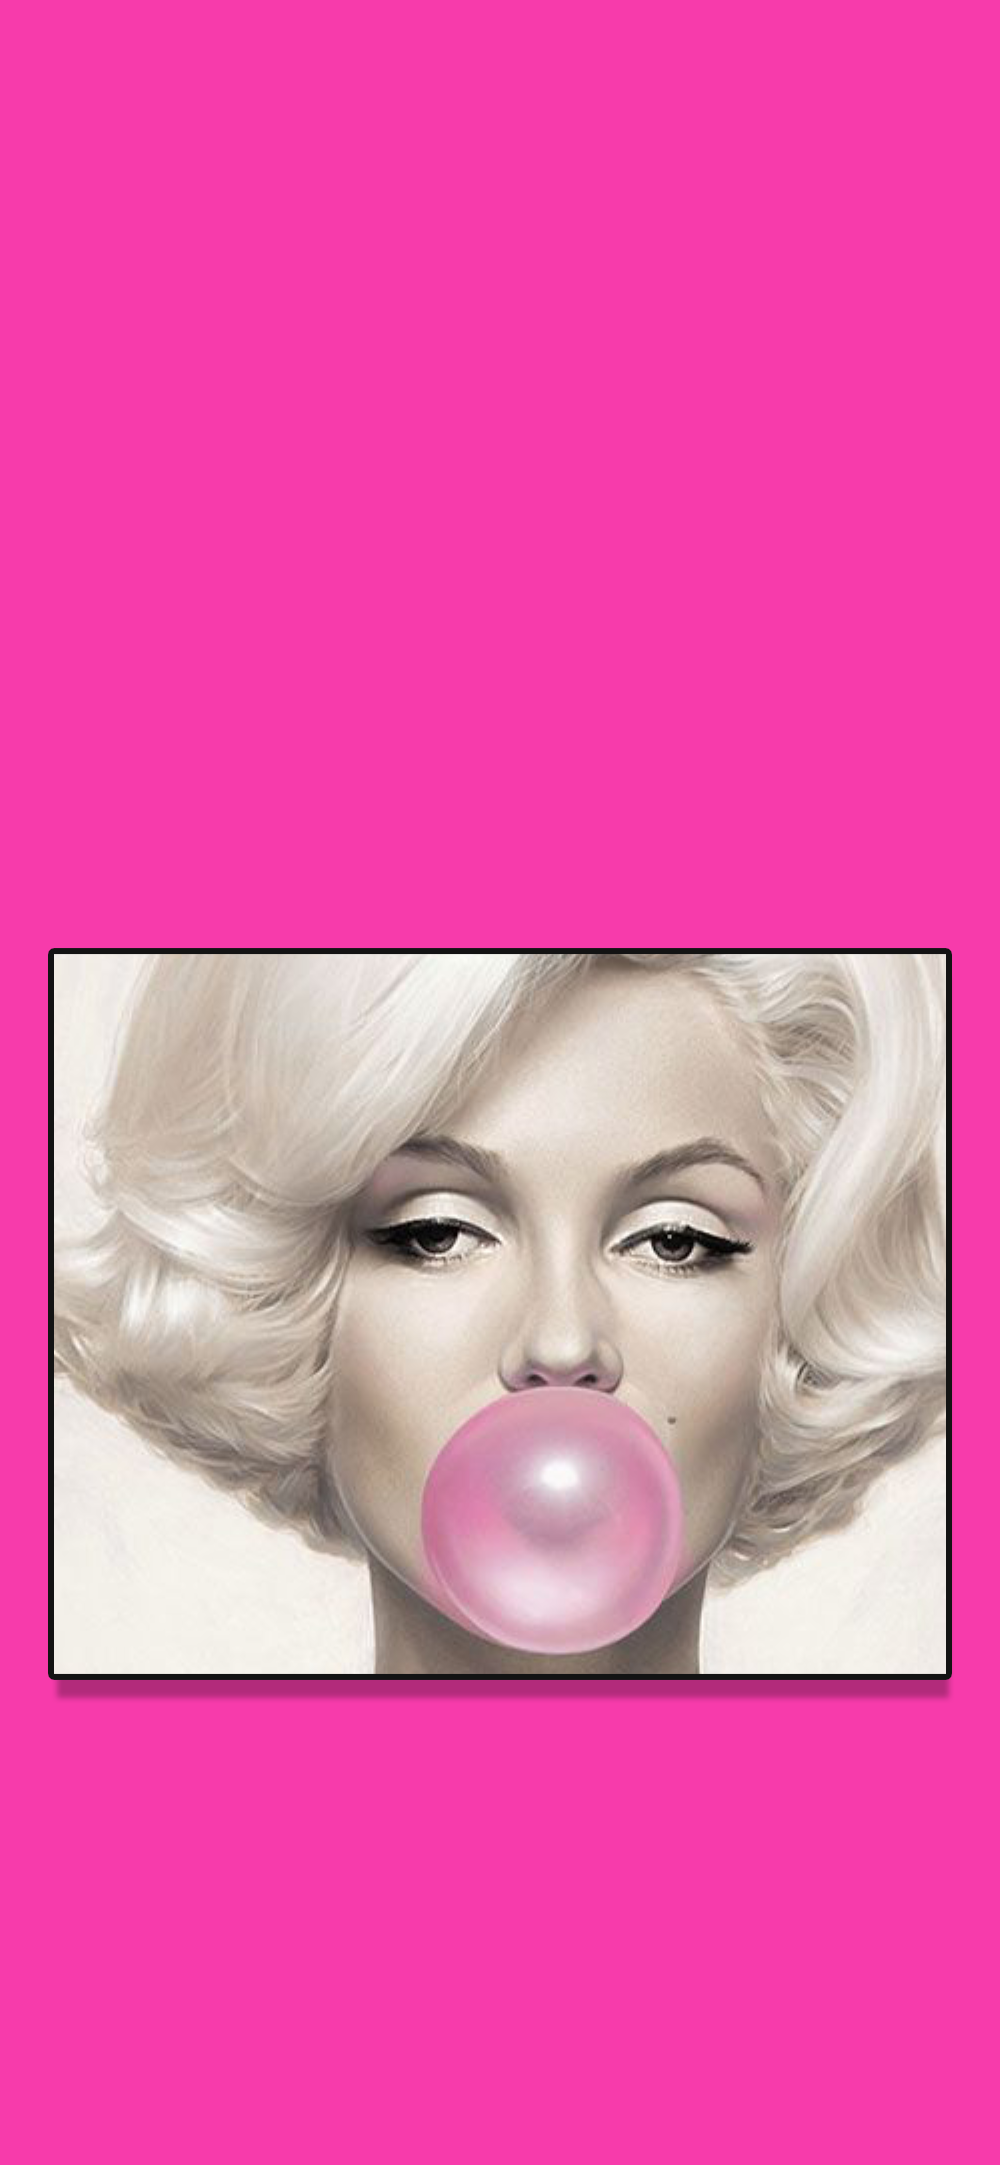 2300 Bubble Gum Background Illustrations RoyaltyFree Vector Graphics   Clip Art  iStock